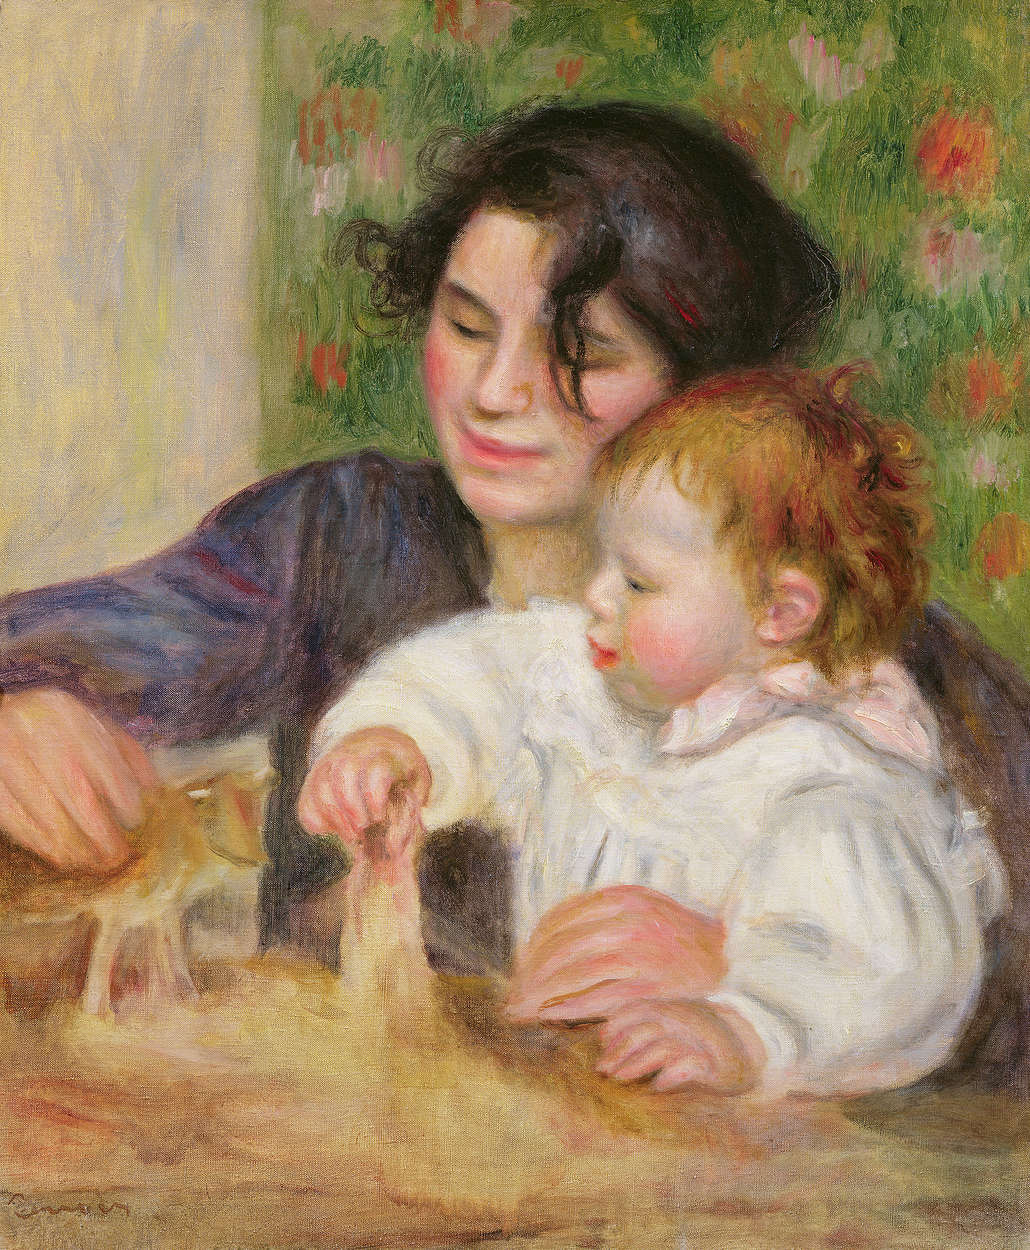             Photo wallpaper "Gabrielle and Jean" by Pierre Auguste Renoir
        